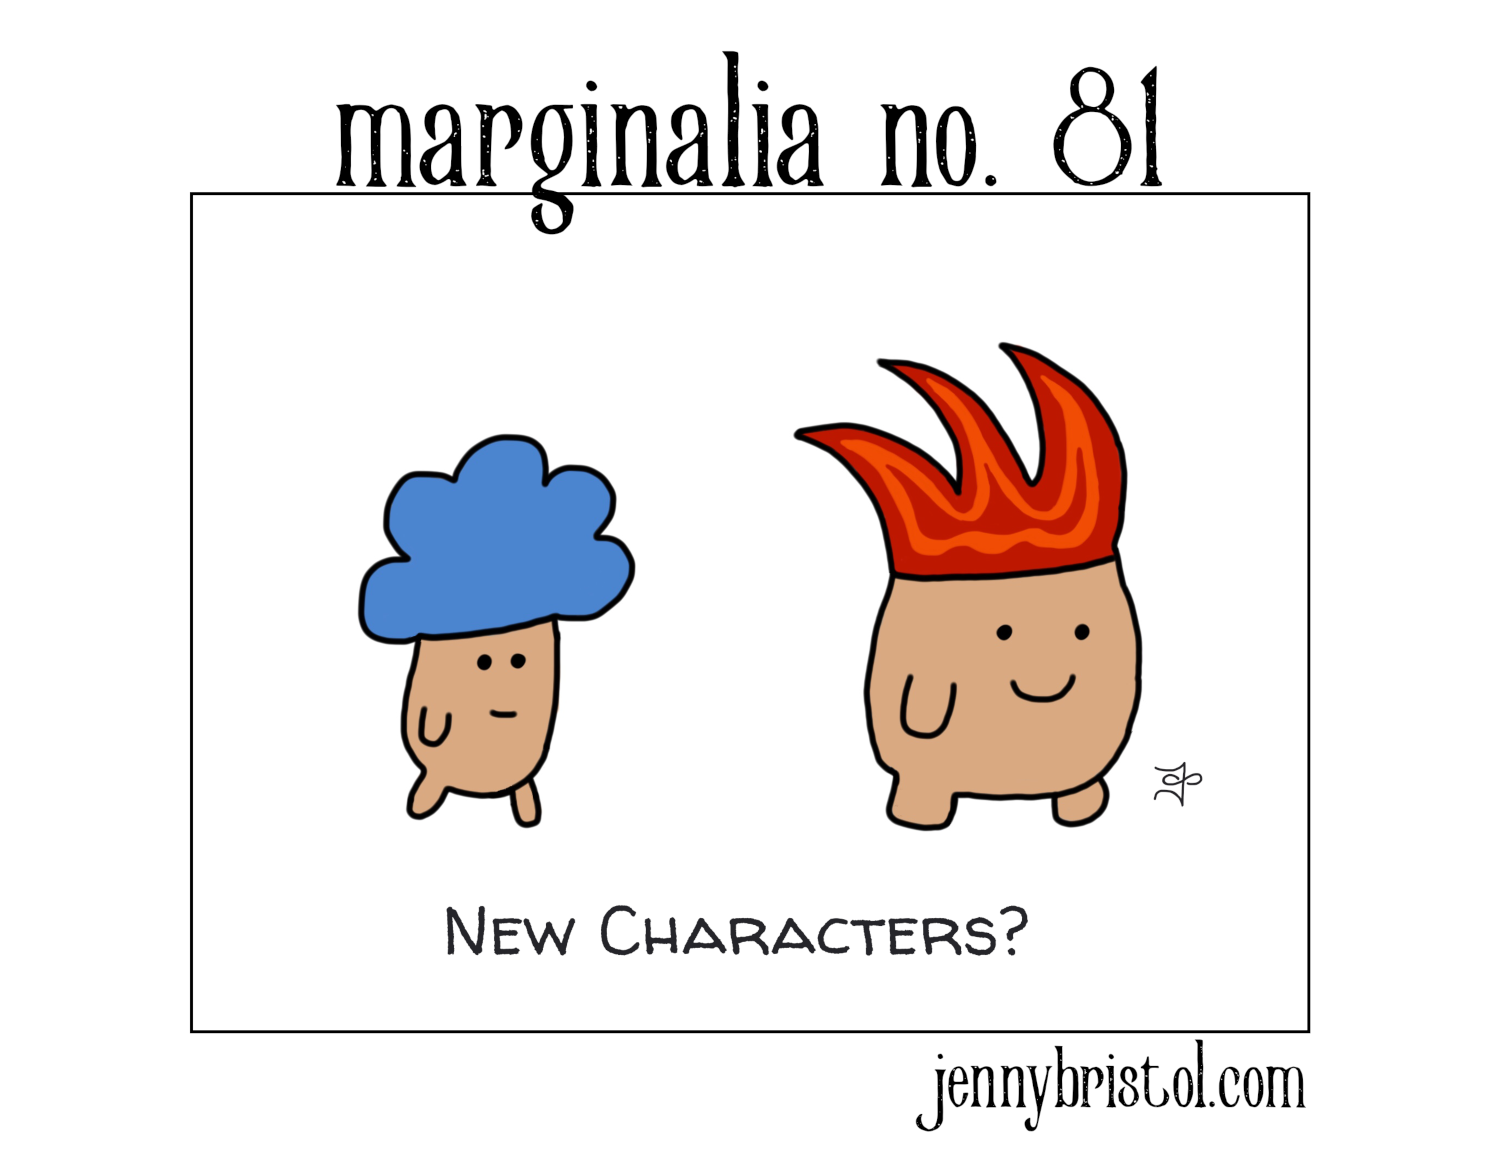 Marginalia No. 81 to post